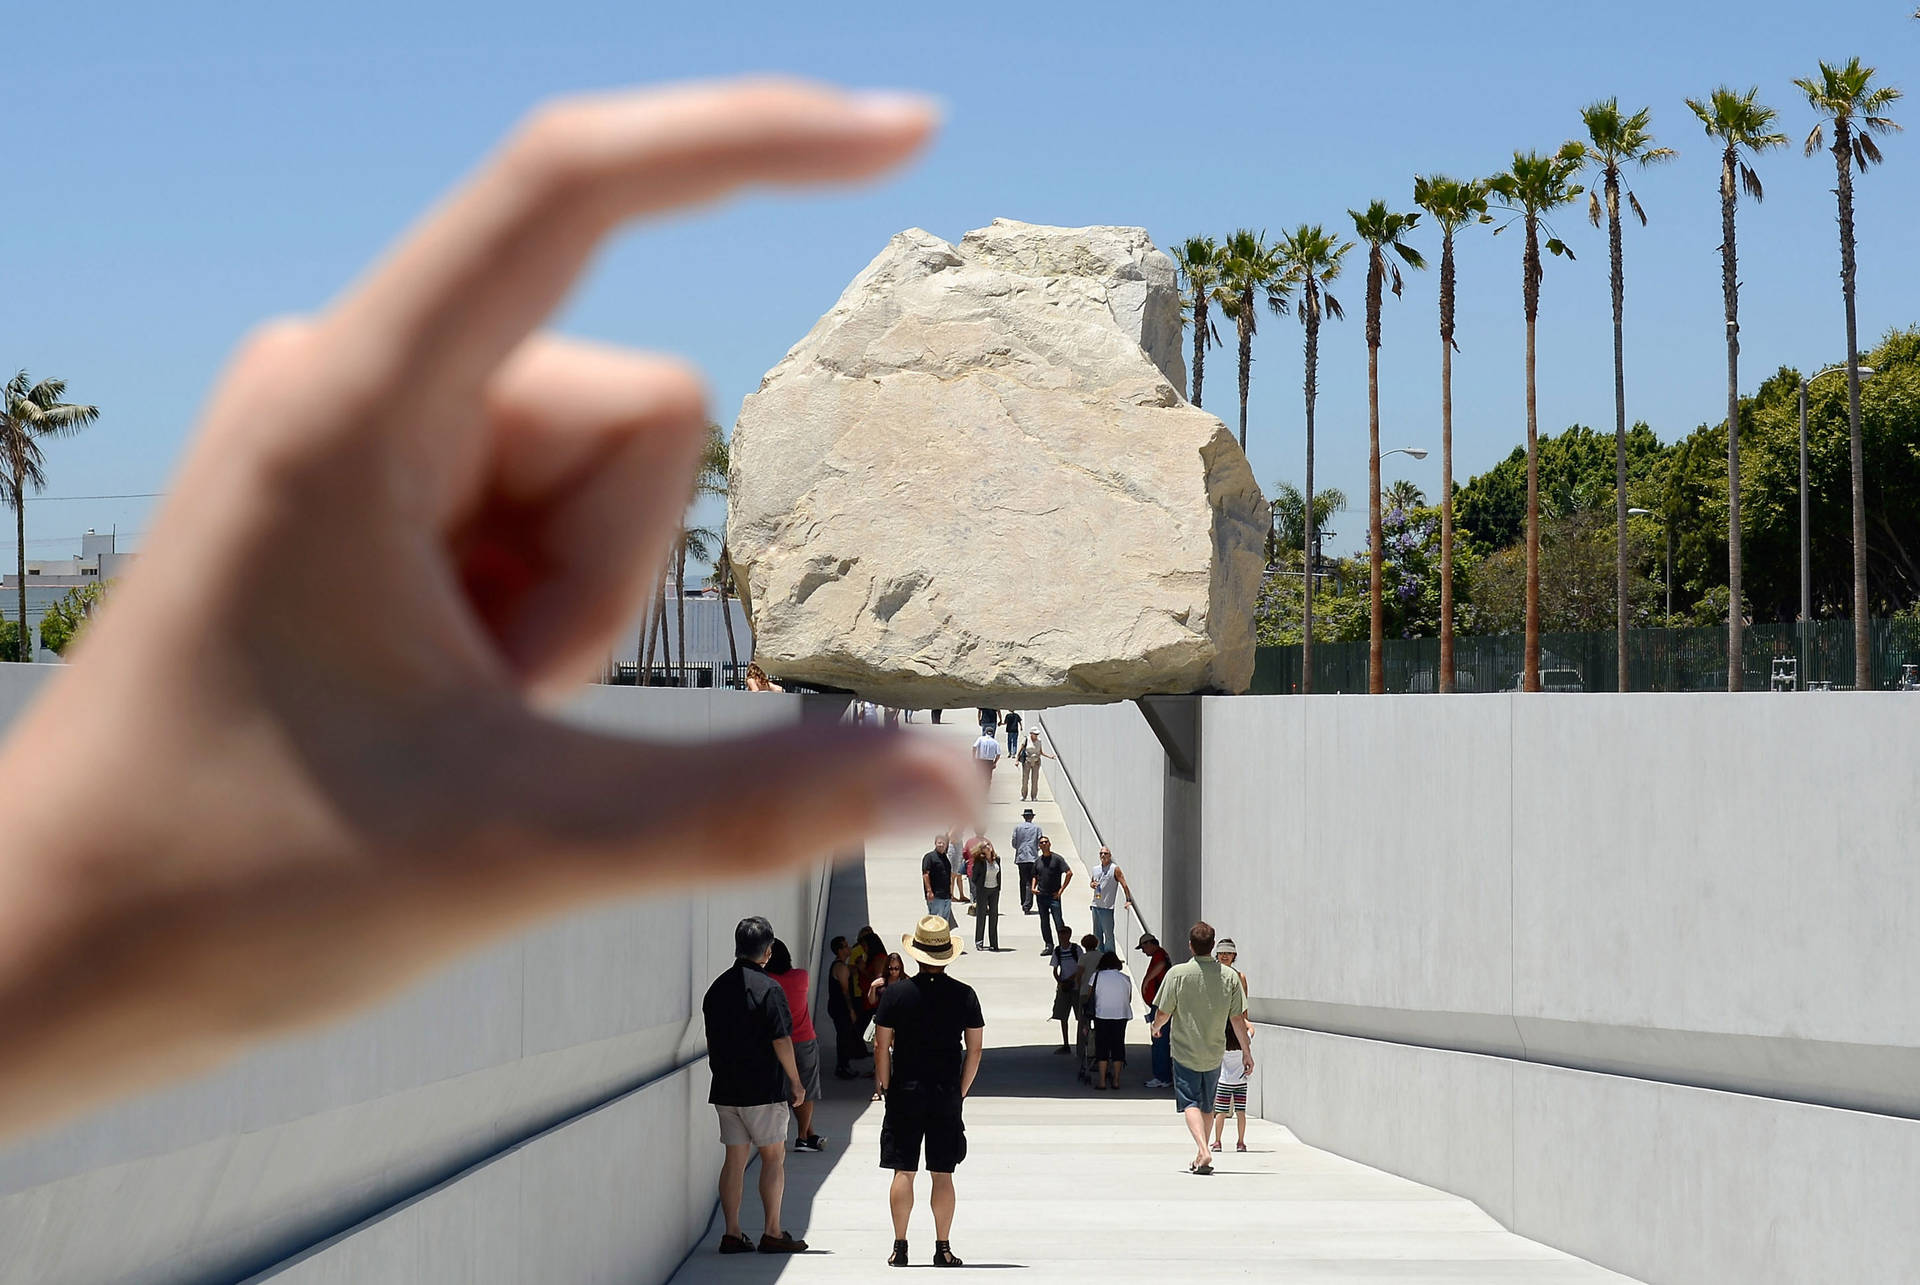 Holding Big Rock Background